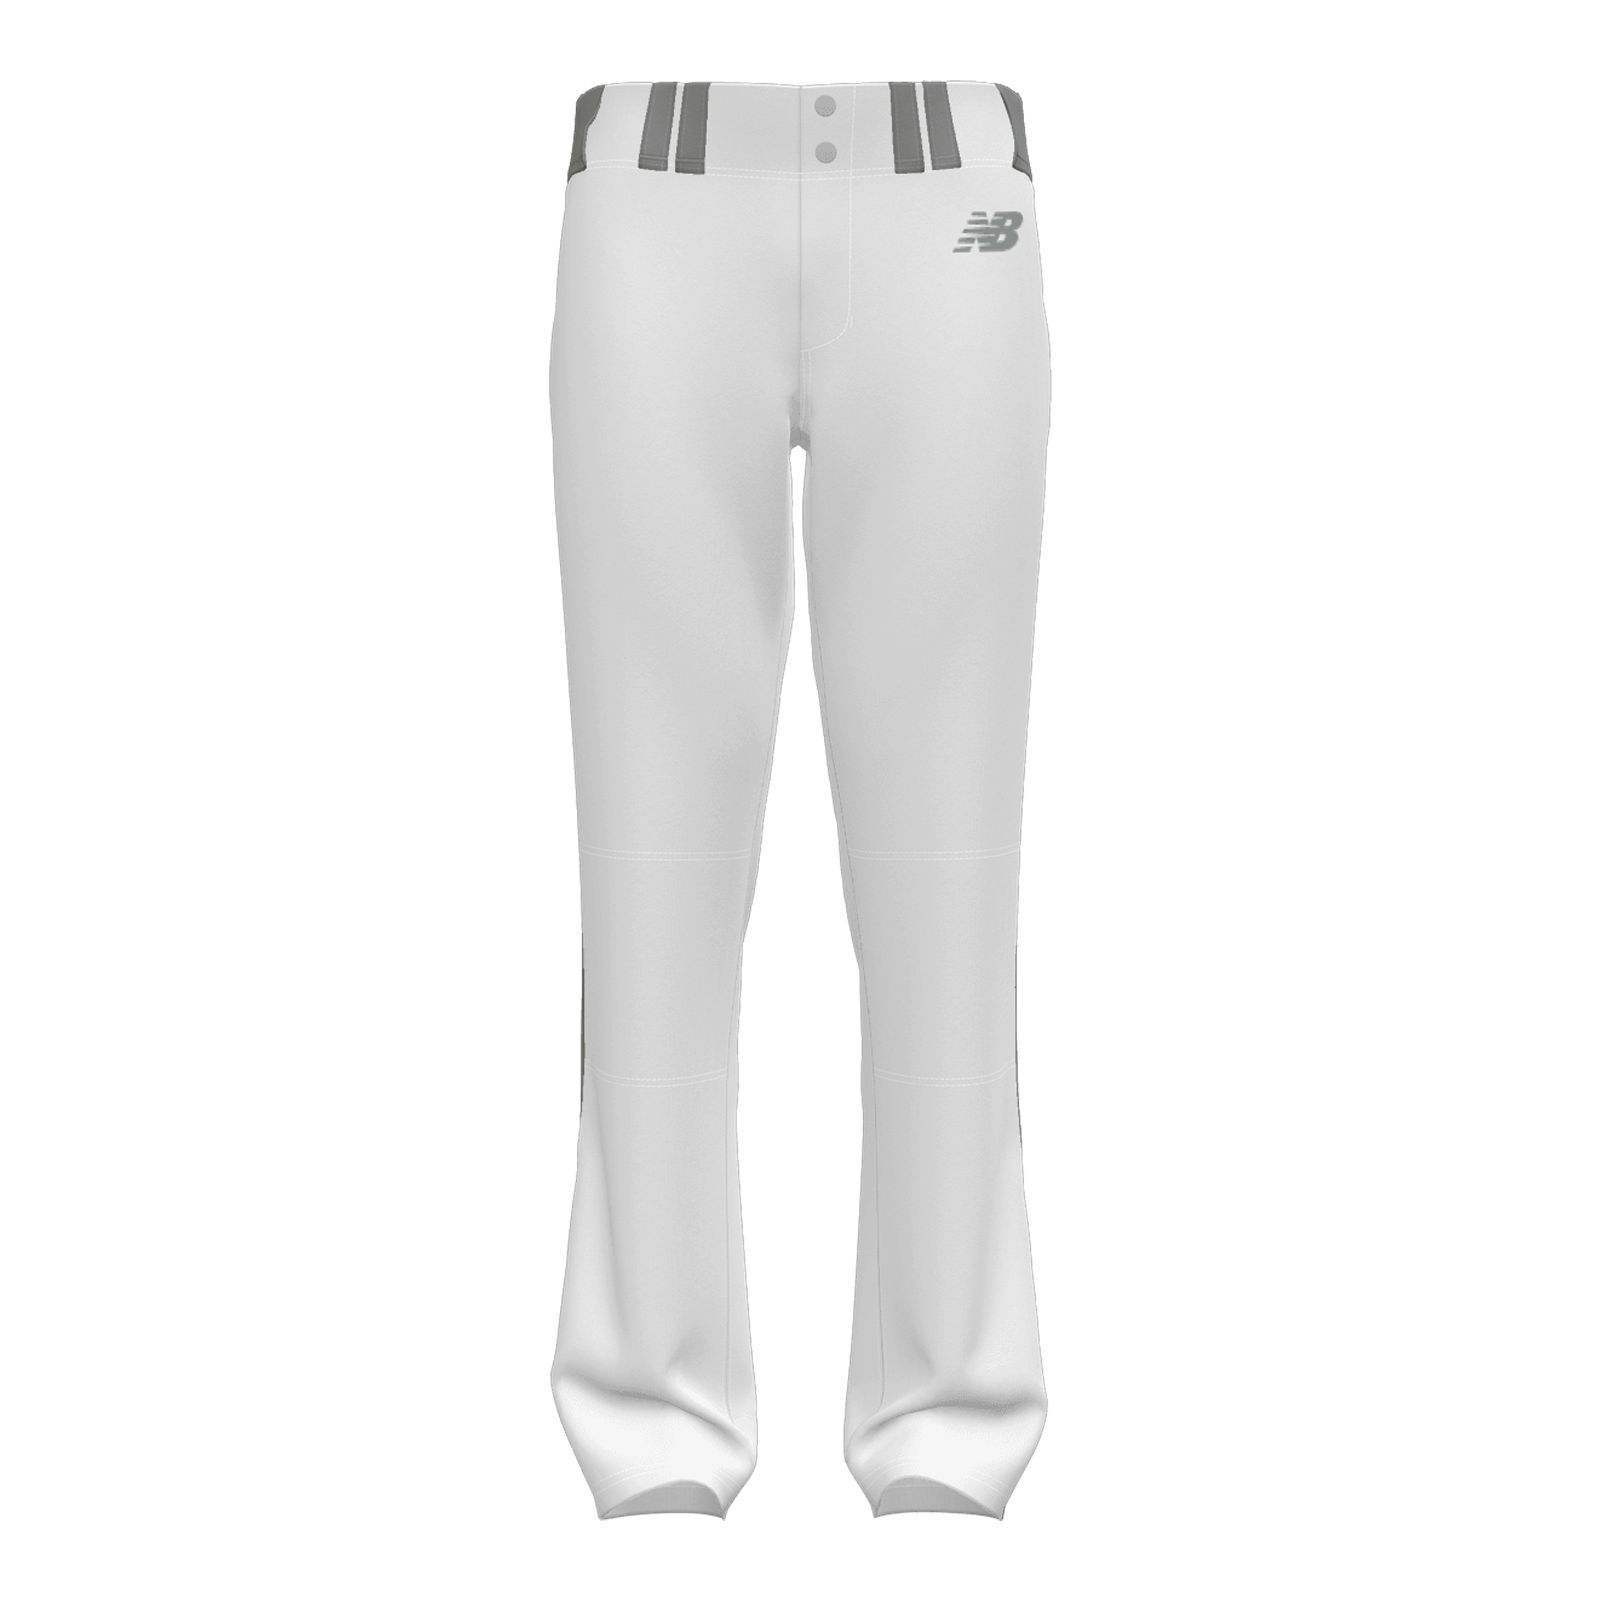 YouCustomizeIt Custom Baseball Jersey Mens Pajama Pants - XL (Personalized)